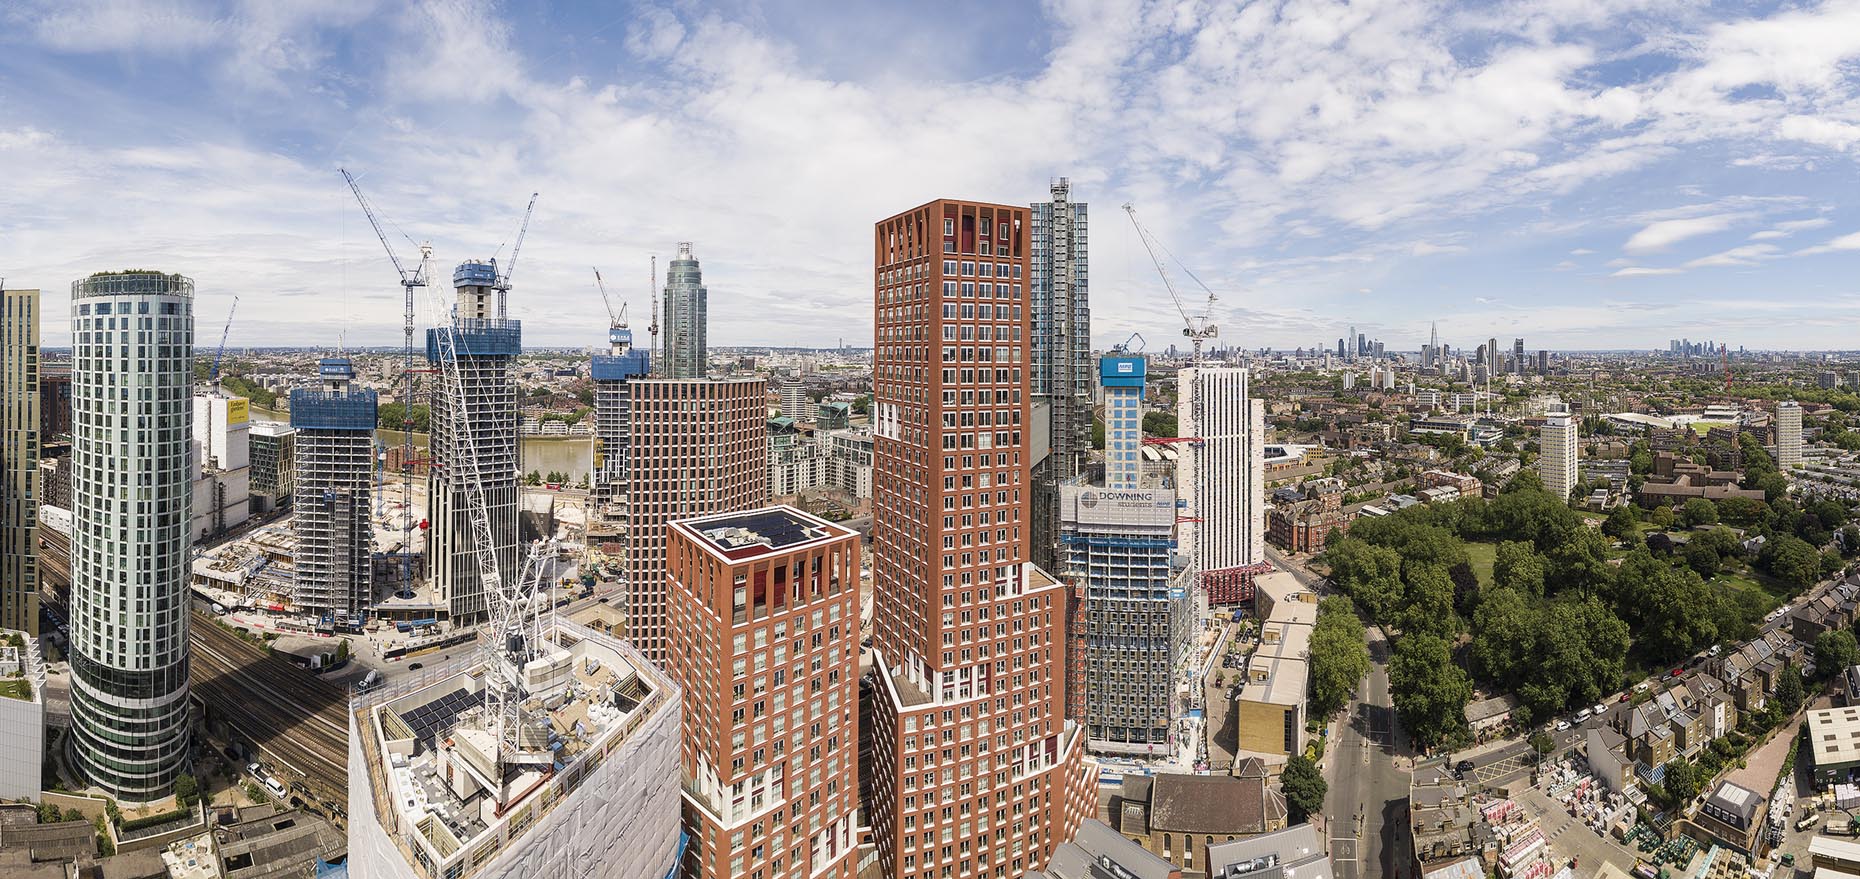 vauxhall-skyscraper-architecture-london-drone-photographer